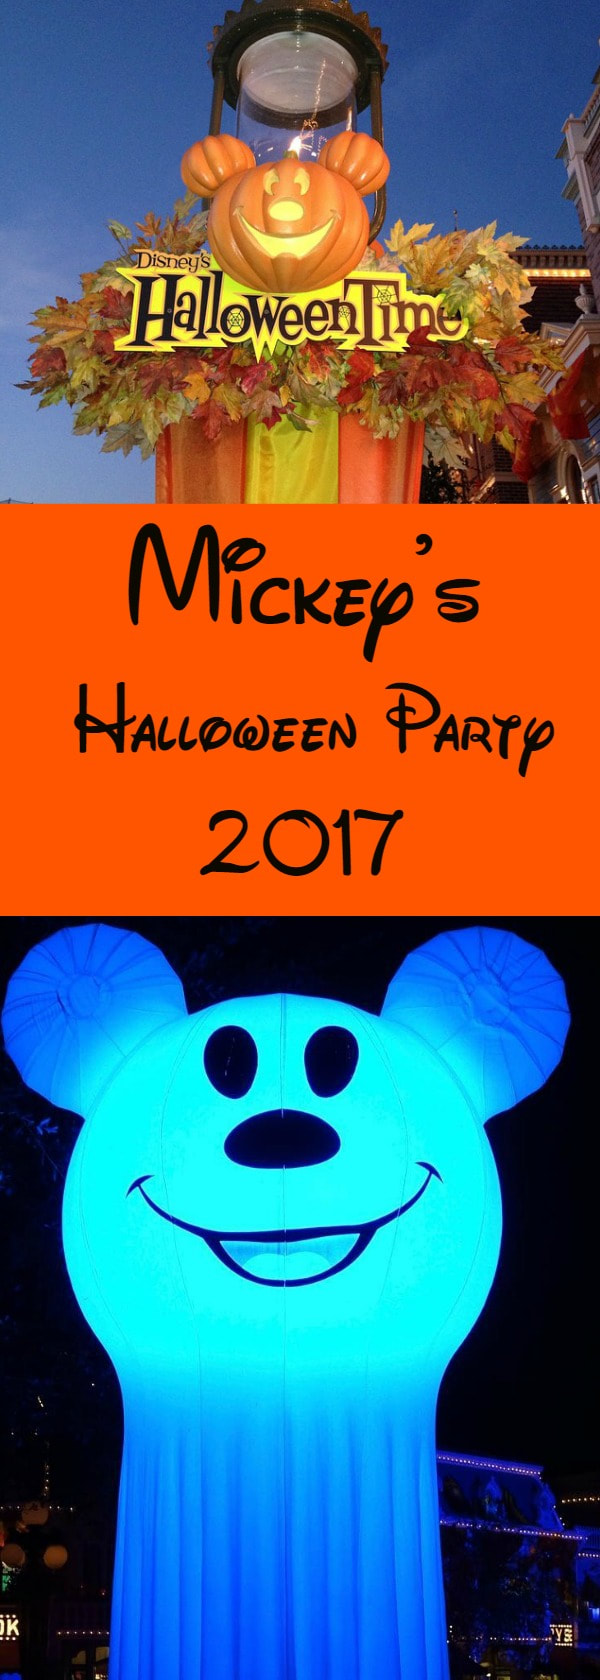 Mickey’s Halloween Party 2017